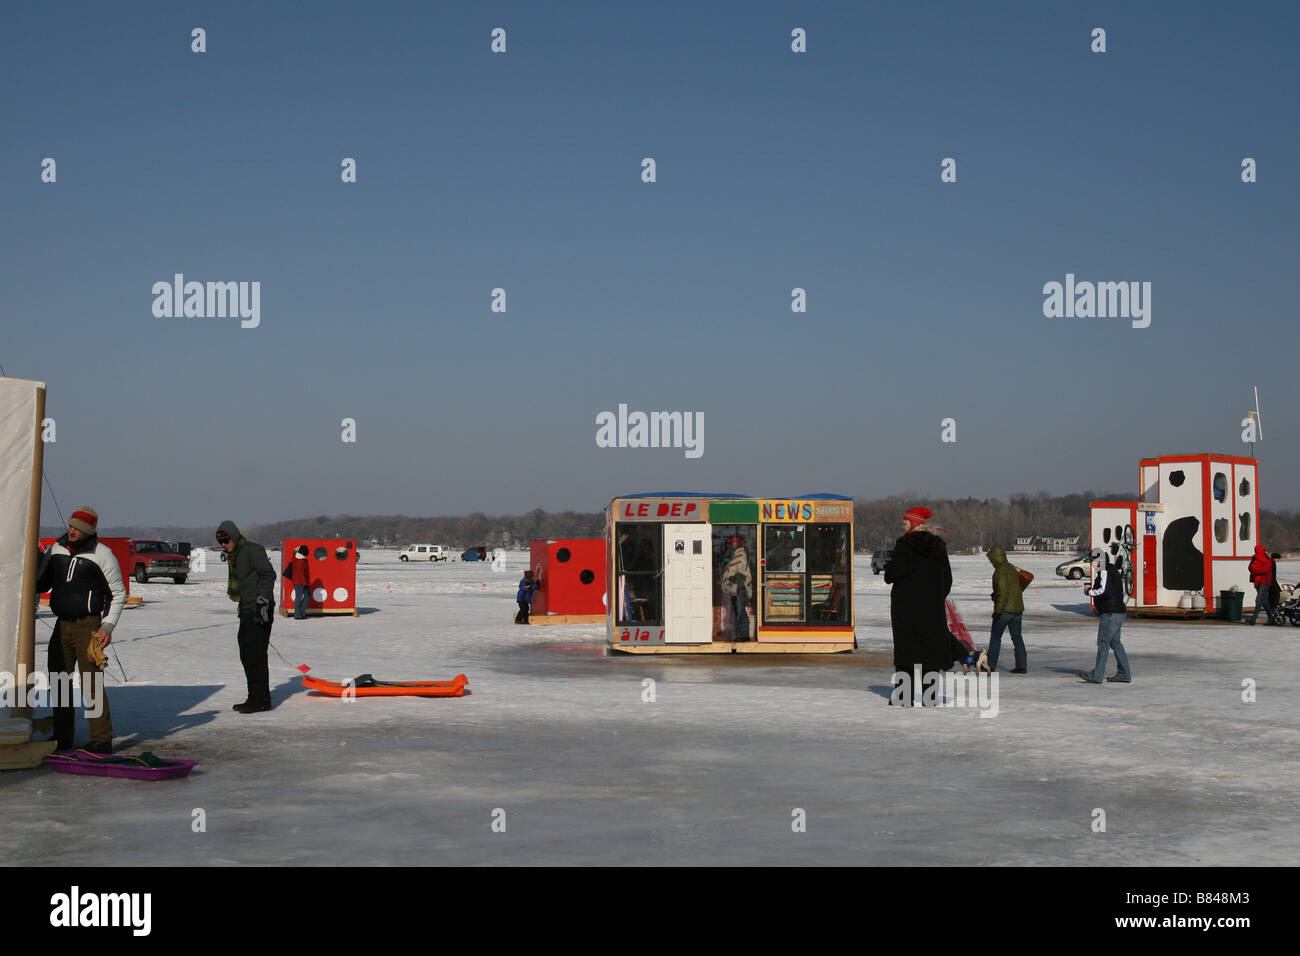 The Art Shanty Project on Medicine Lake in Minneapolis, Minnesota. Stock Photo